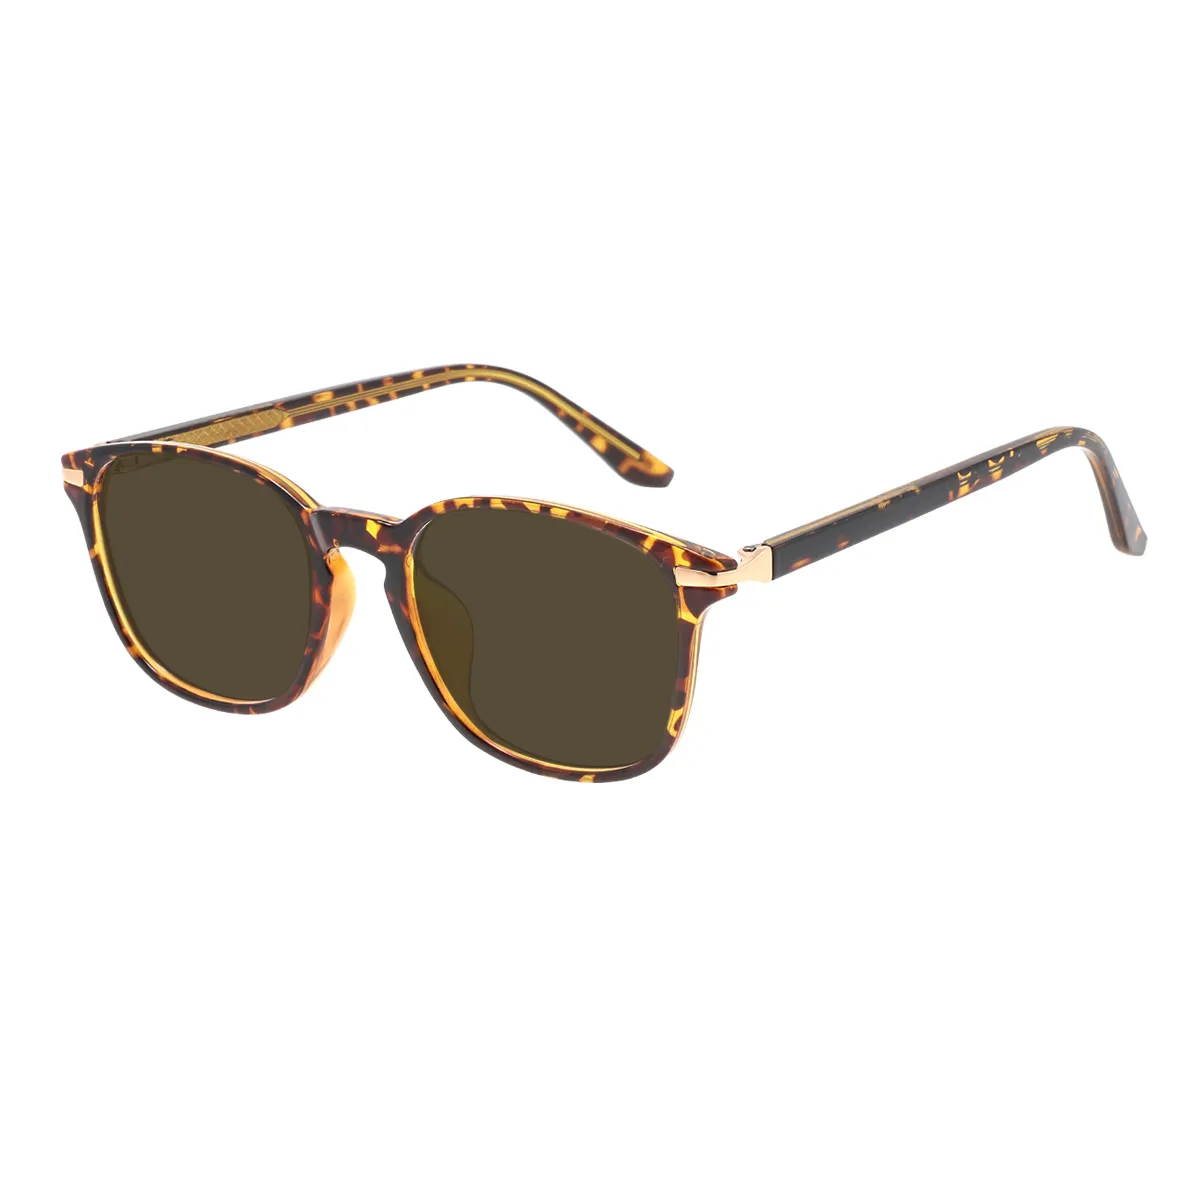 Emerson - Square Tortoiseshell Sunglasses for Men & Women